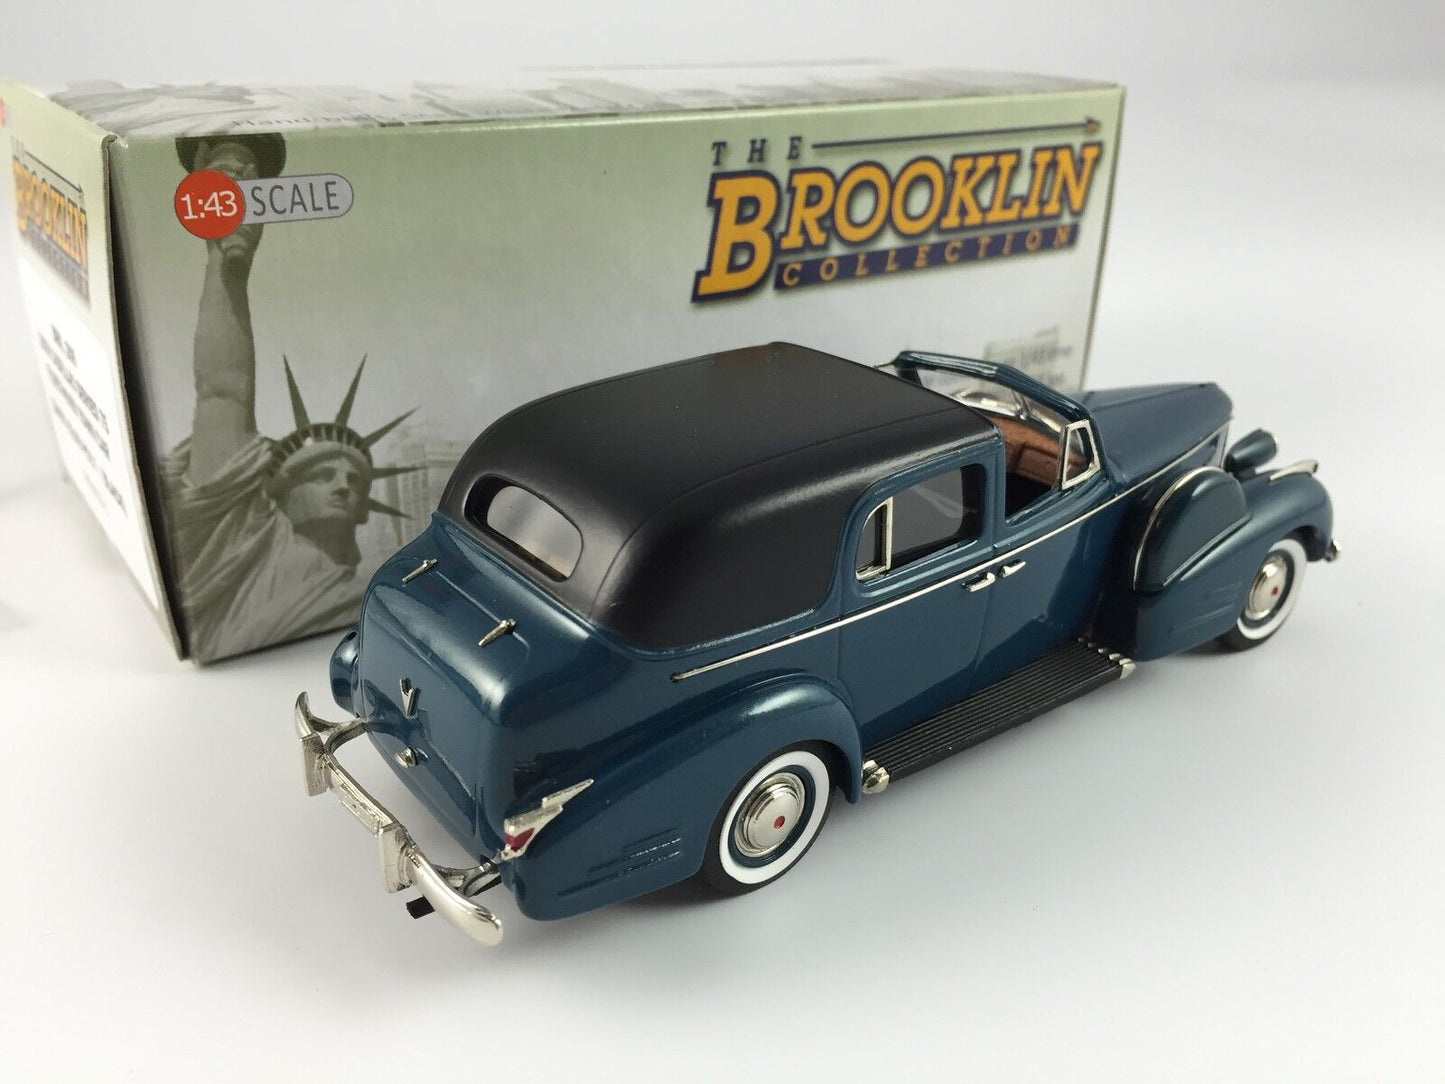 1/43 BROOKLIN 209 CADILLAC SERIE 75 FLEETWOOD TOWN CAR 1938 DARK BLUE POLY BLACK